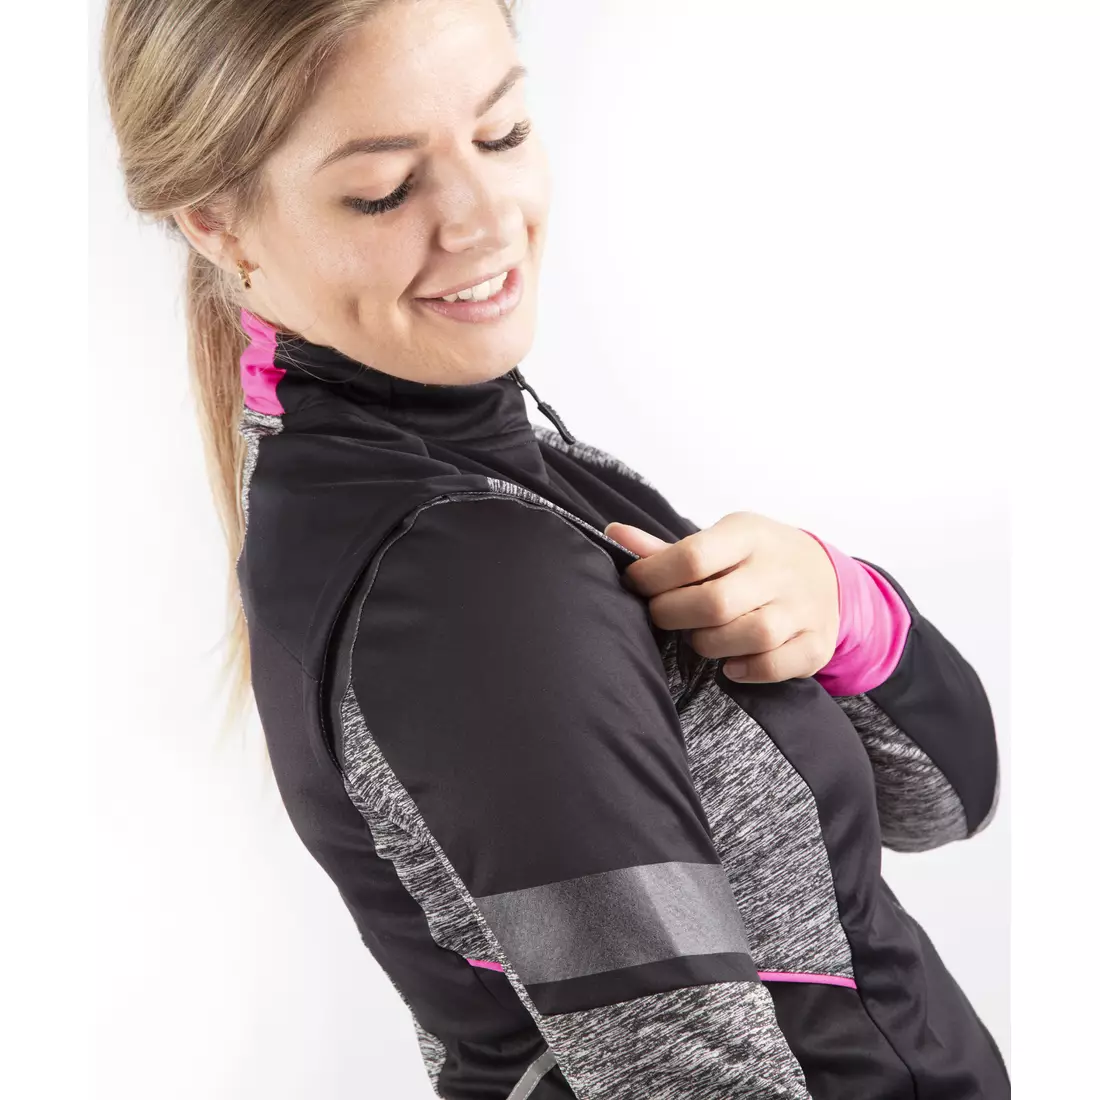 Rogelli BLISS winter women's cycling jacket Black-gray-pink 010.310